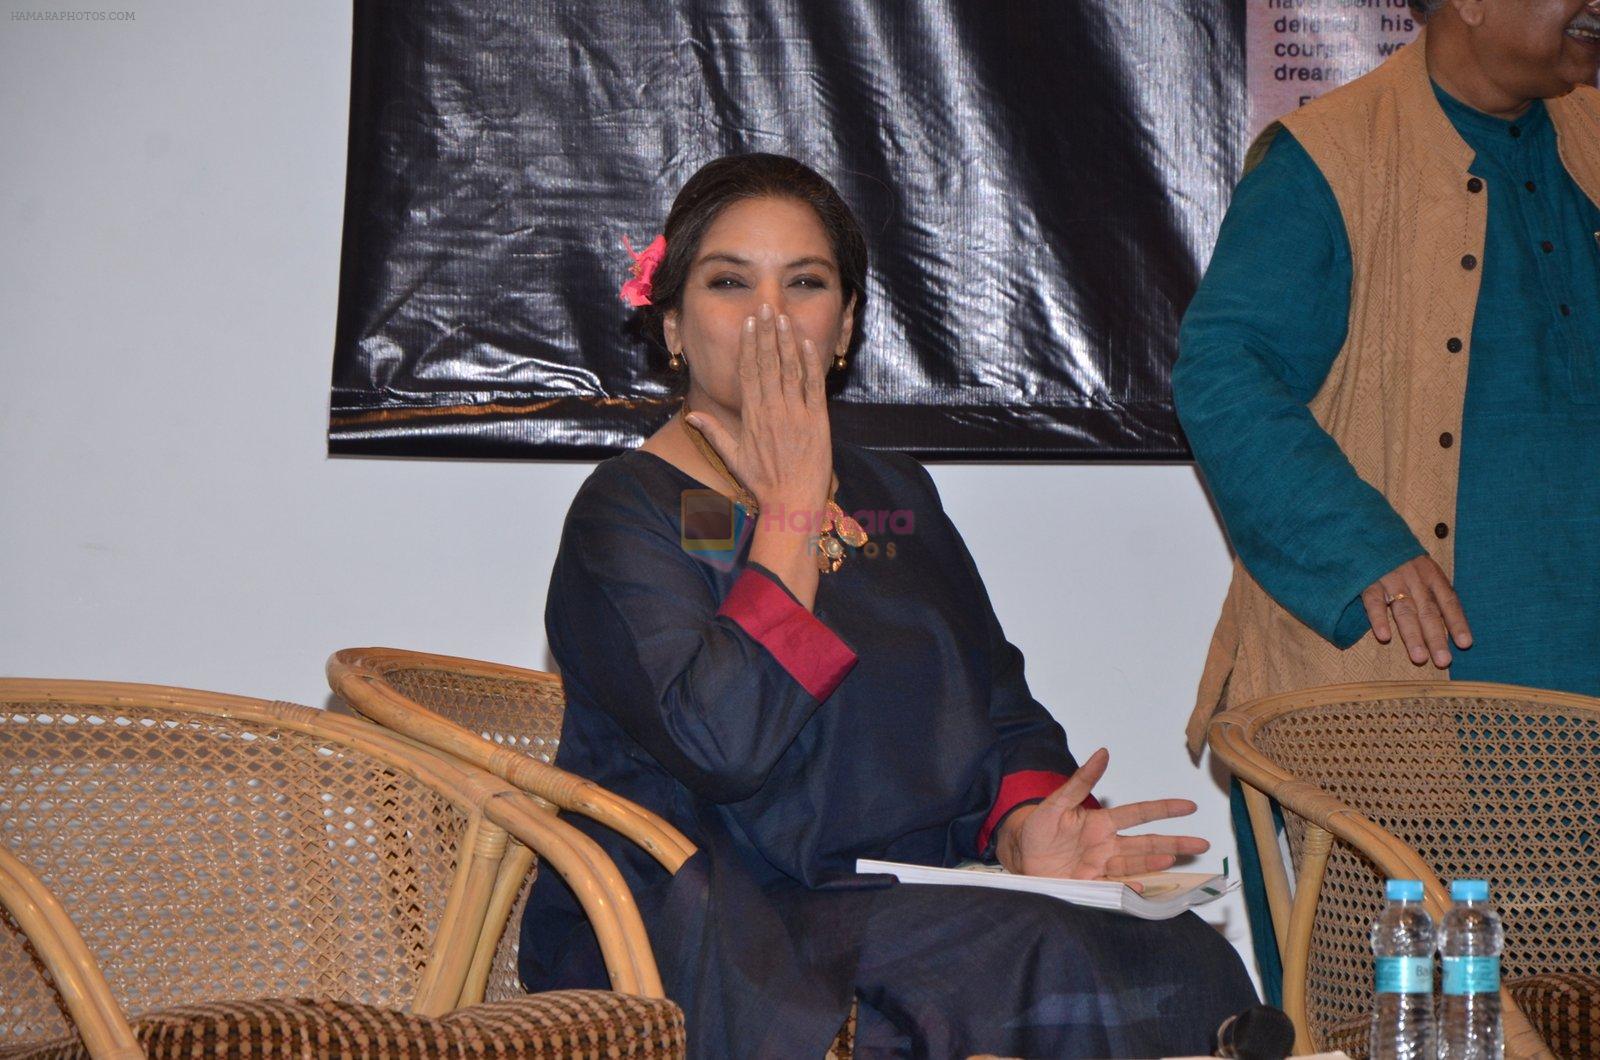 Shabana Azmi at book Launch on 6th Nov 2015